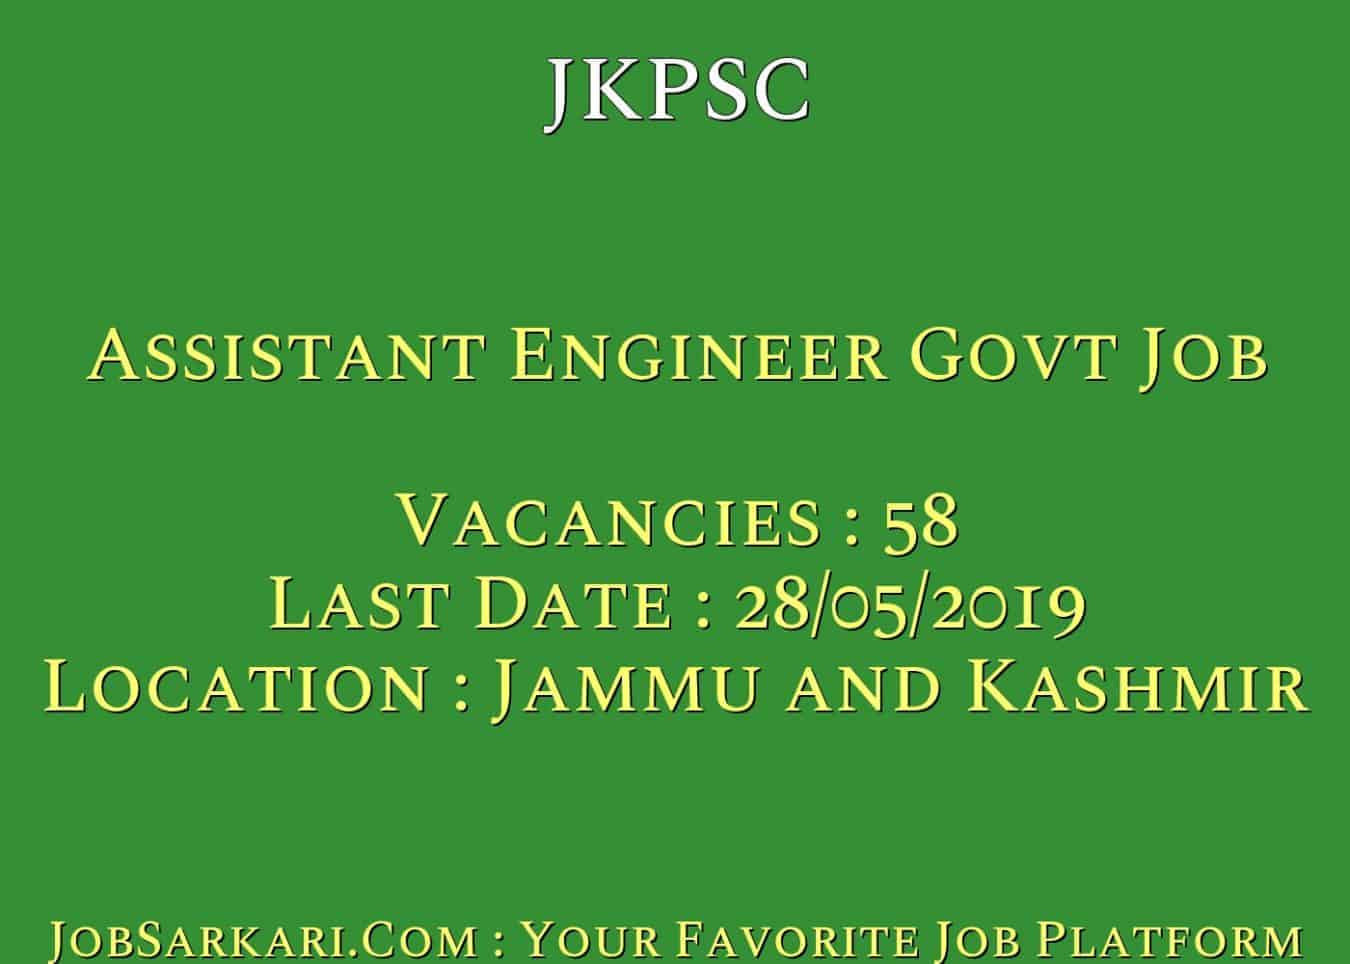 JKPSC Recruitment 2019 For Assistant Engineer Govt Job